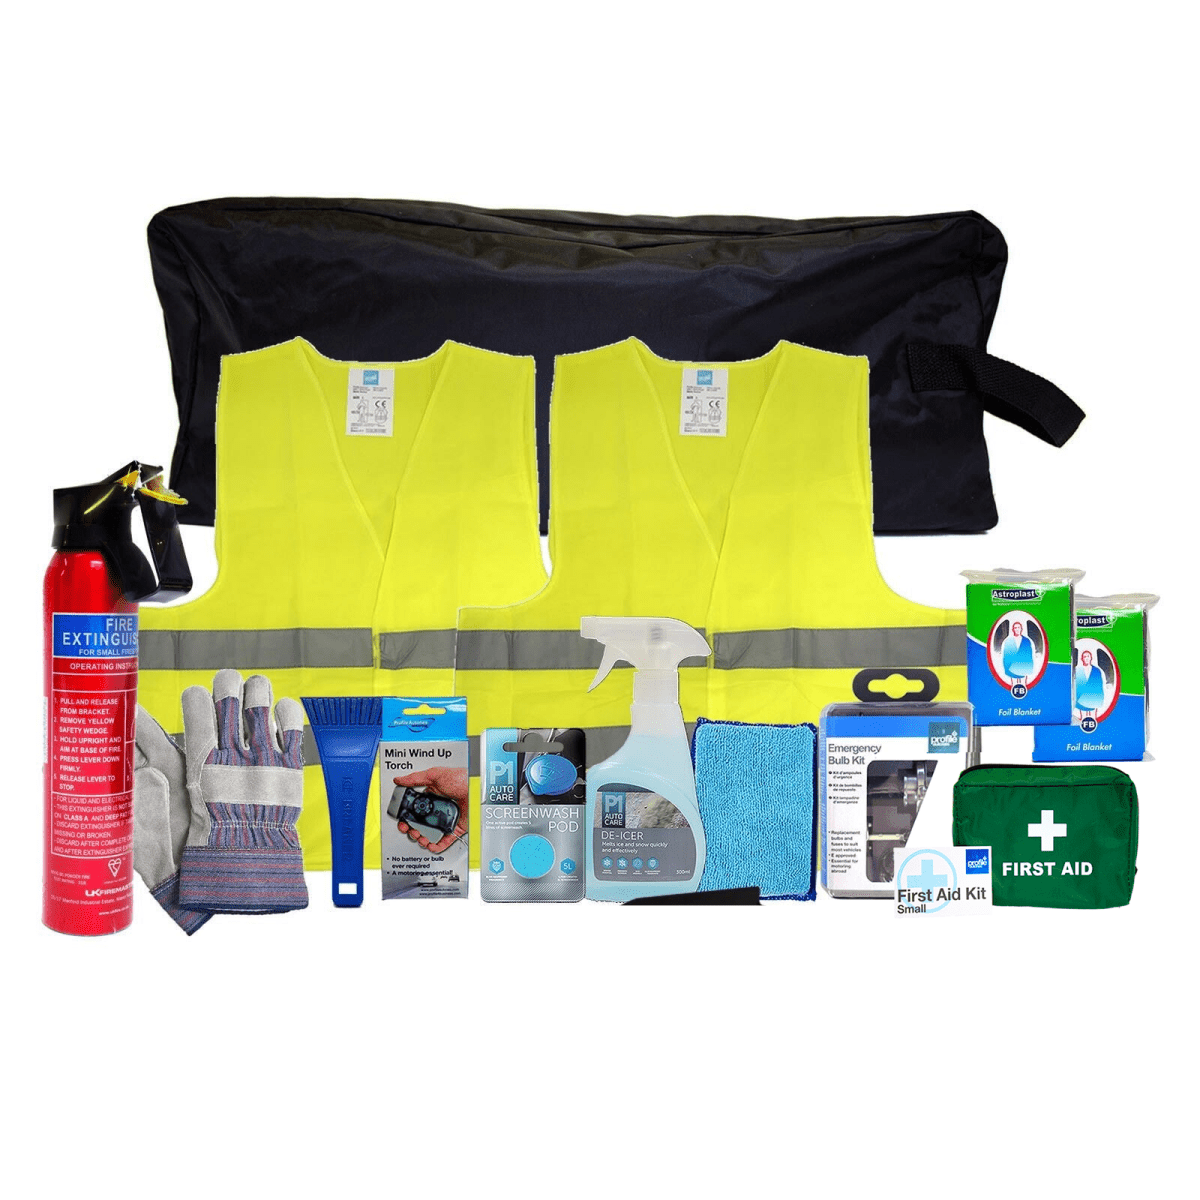 Winter Car Emergency Kit – Comprehensive Safety & Survival Pack for Cold Weather Driving - Green Flag Shop